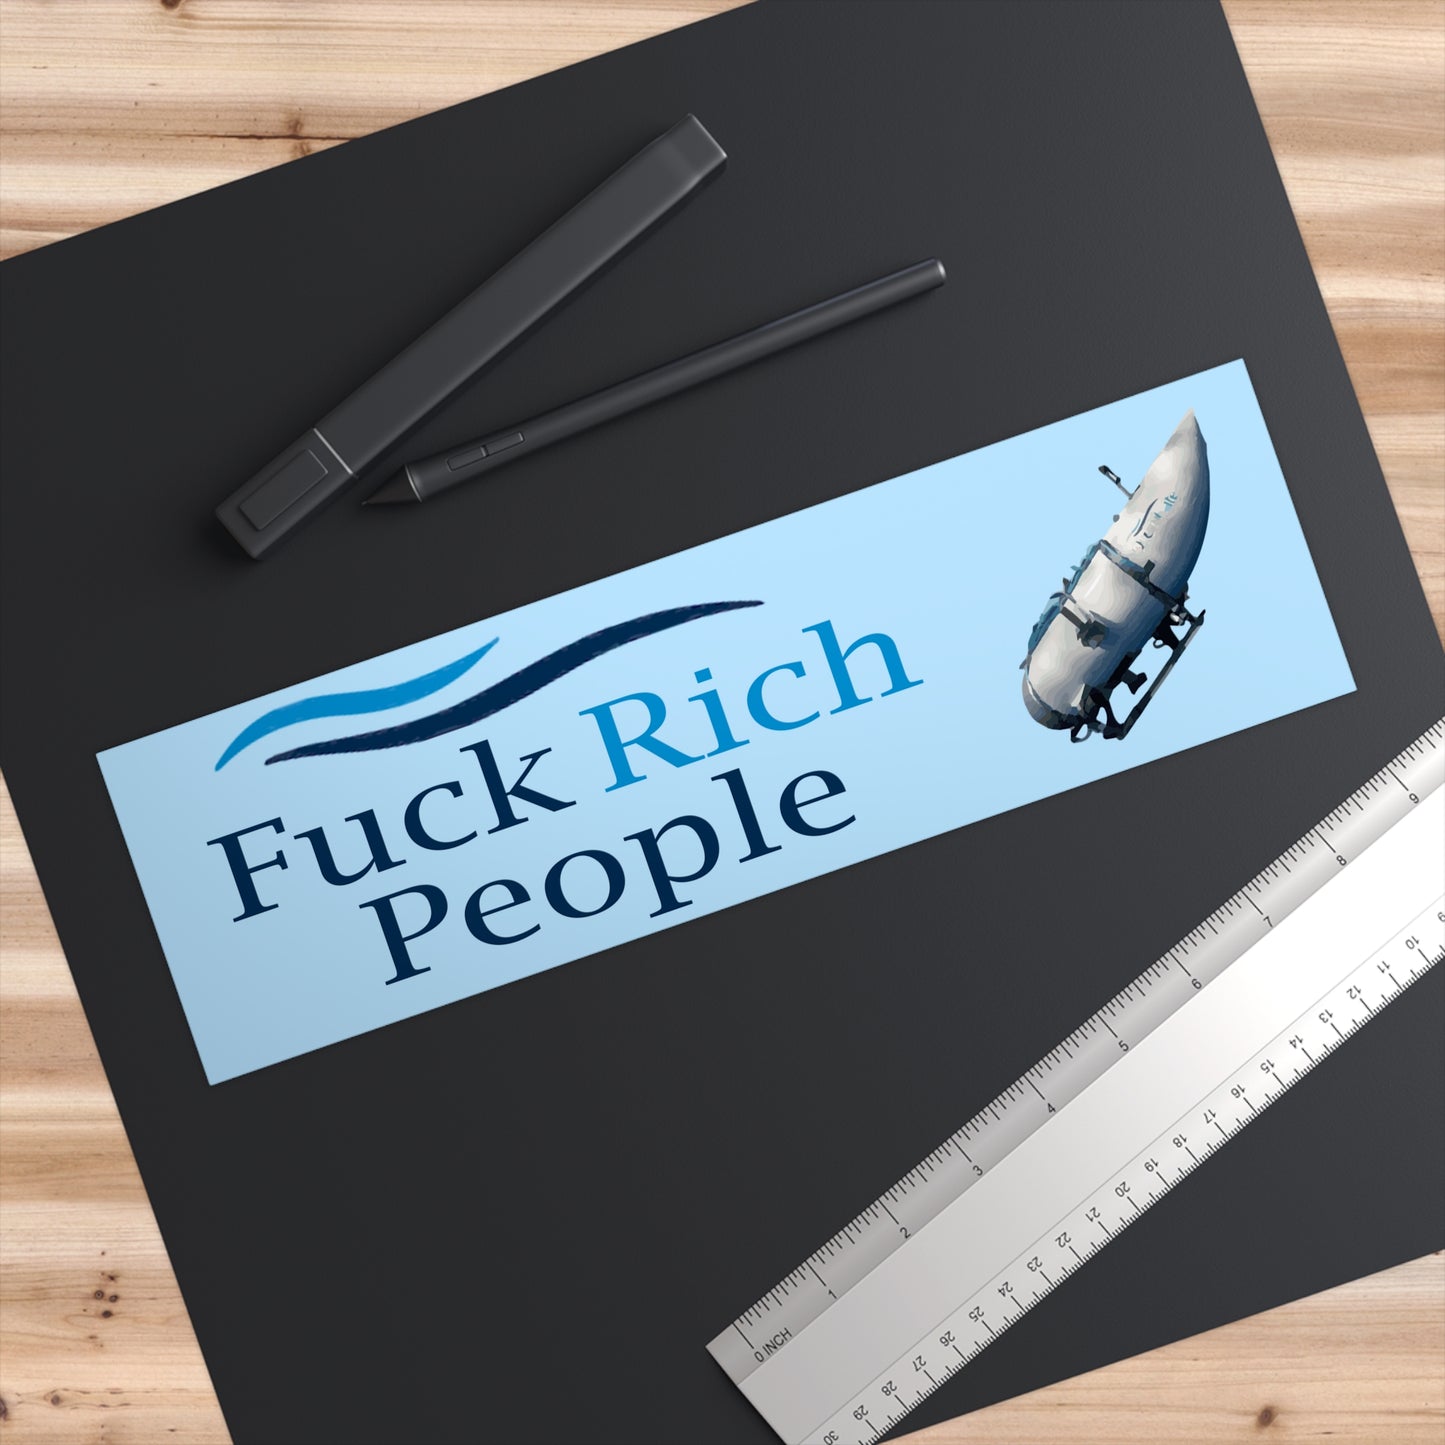 F rich people